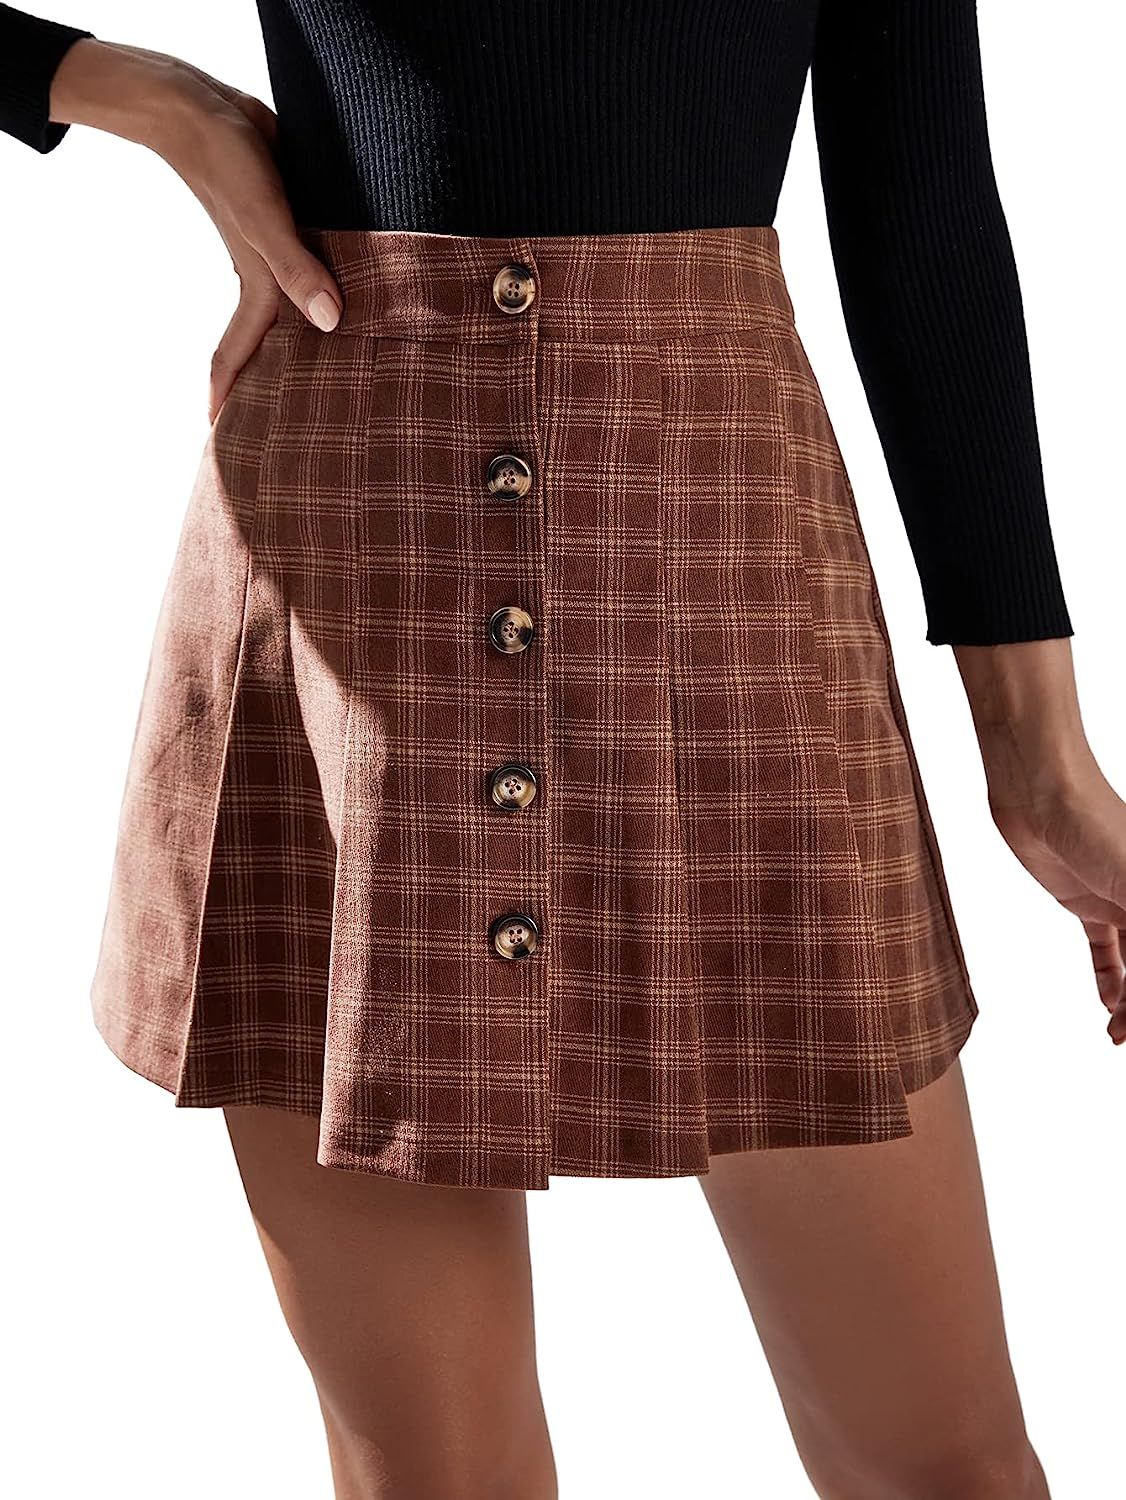 SheIn Women's Plaid Skirts High Waist A Line Flared Mini Skirt Skater Skirt | Amazon (US)